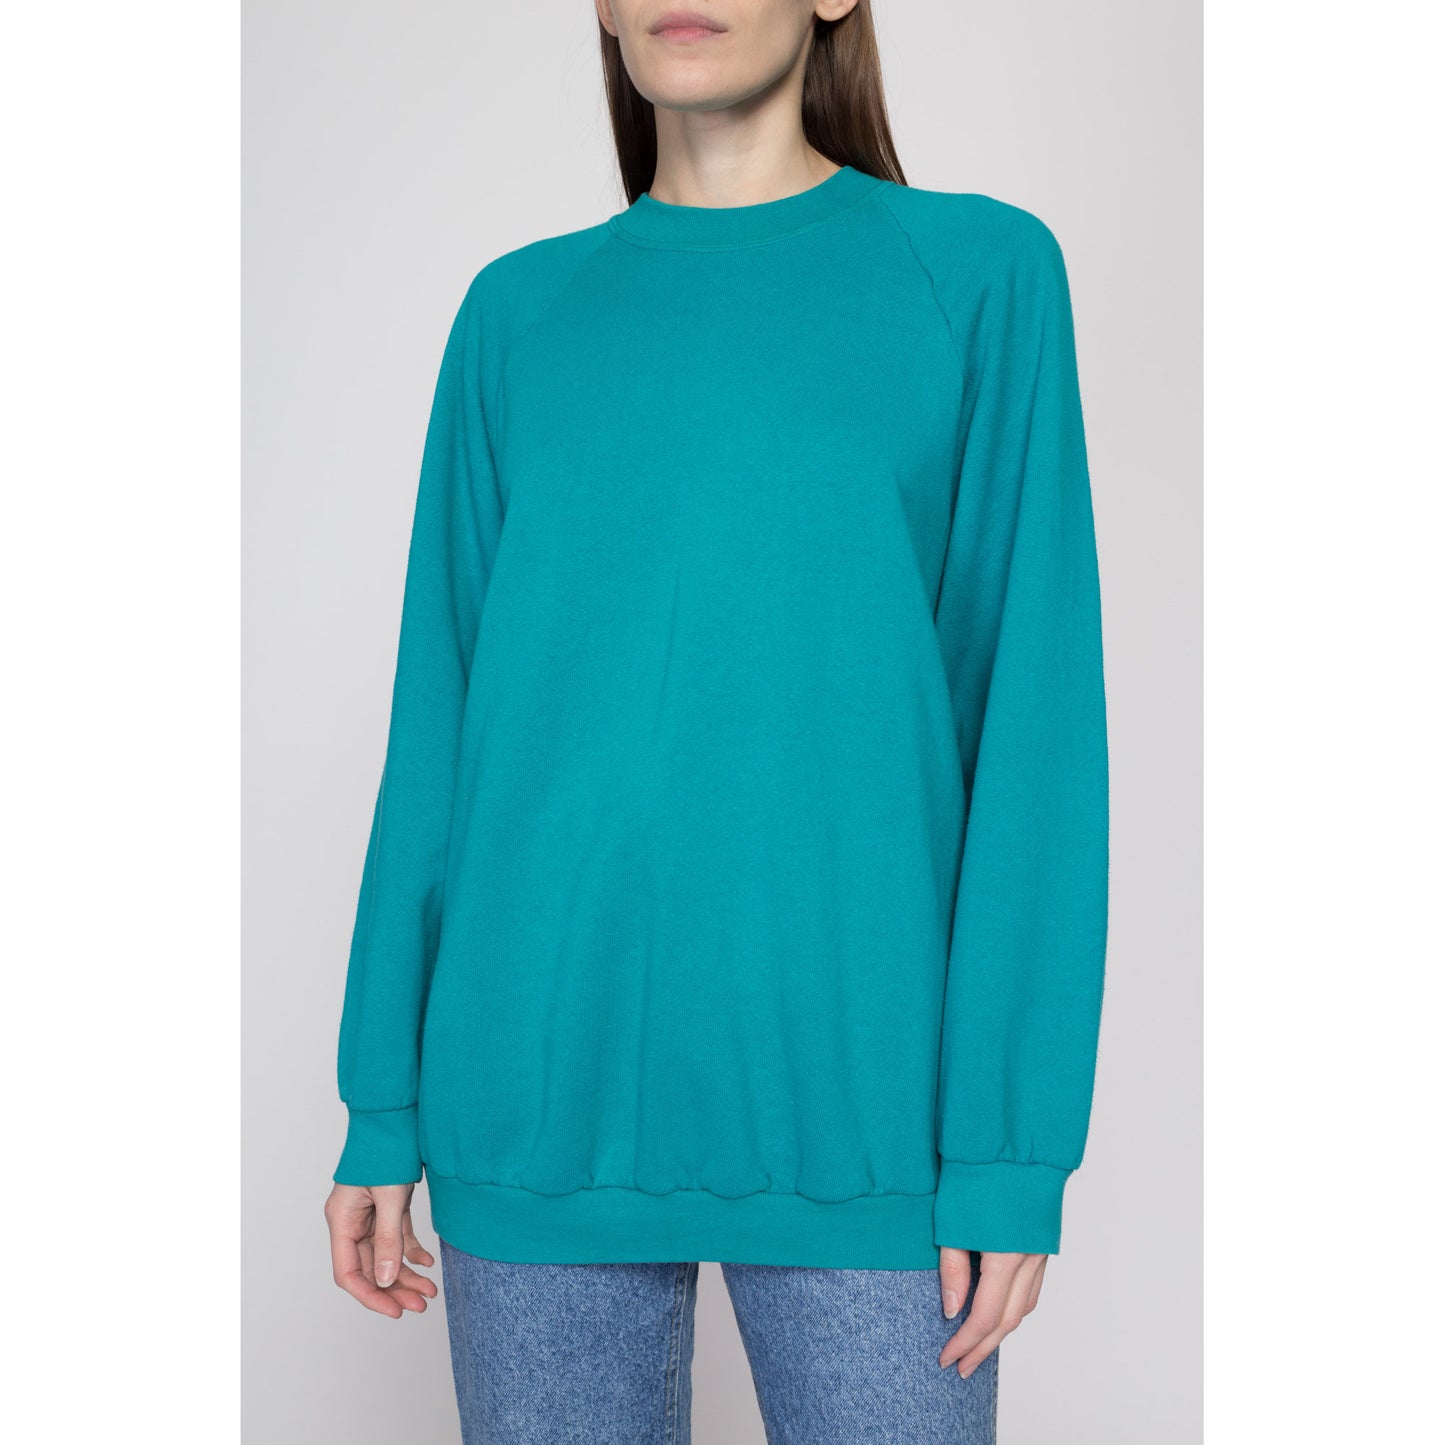 3X 90s Teal Green Crewneck Sweatshirt | Vintage Blank Slouchy Plain Pullover